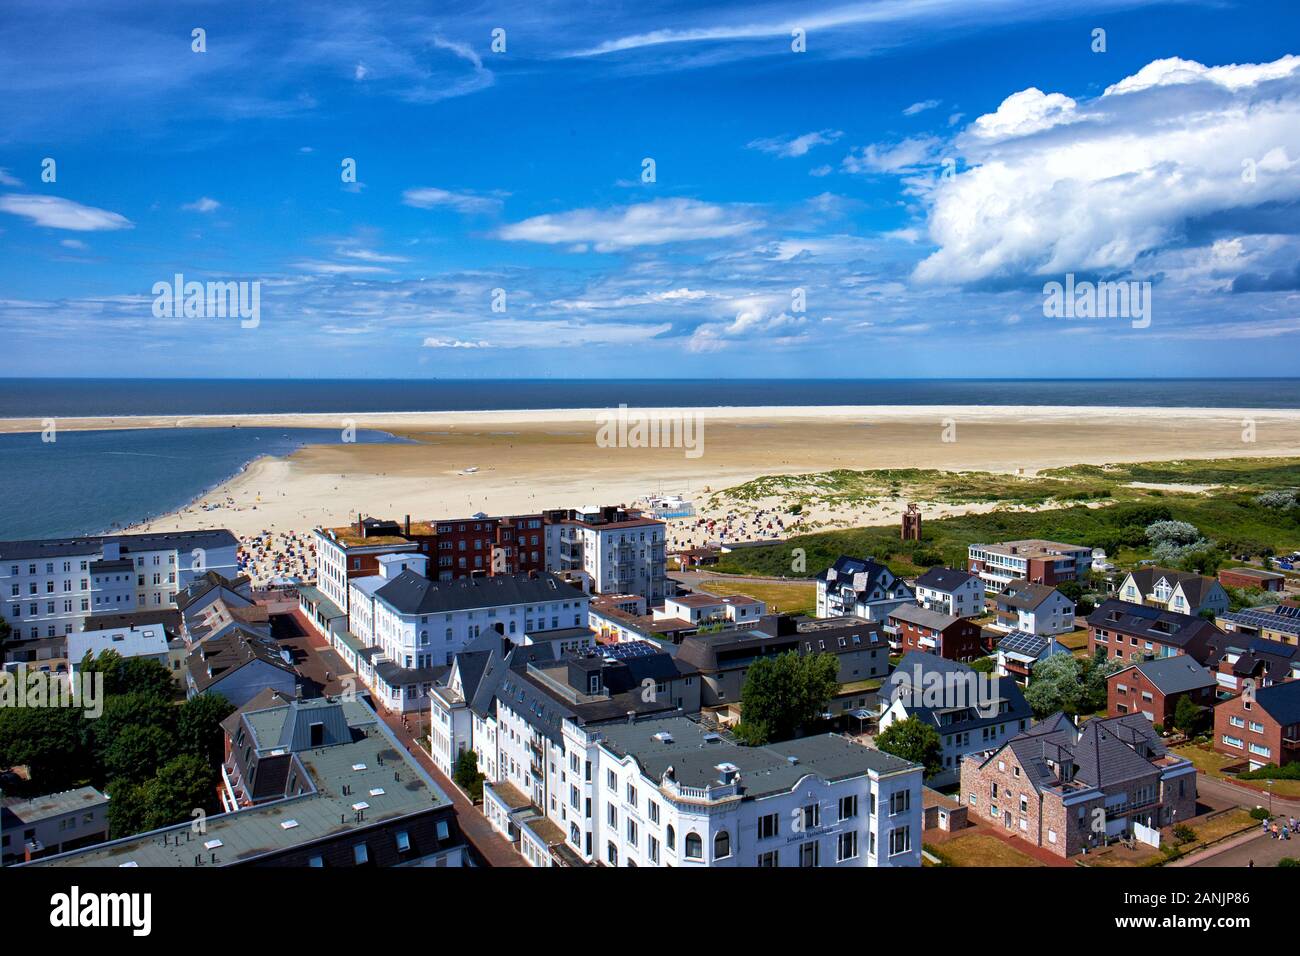 Panoramic view of Borkum town centre, Northern beach and sea Stock Photo